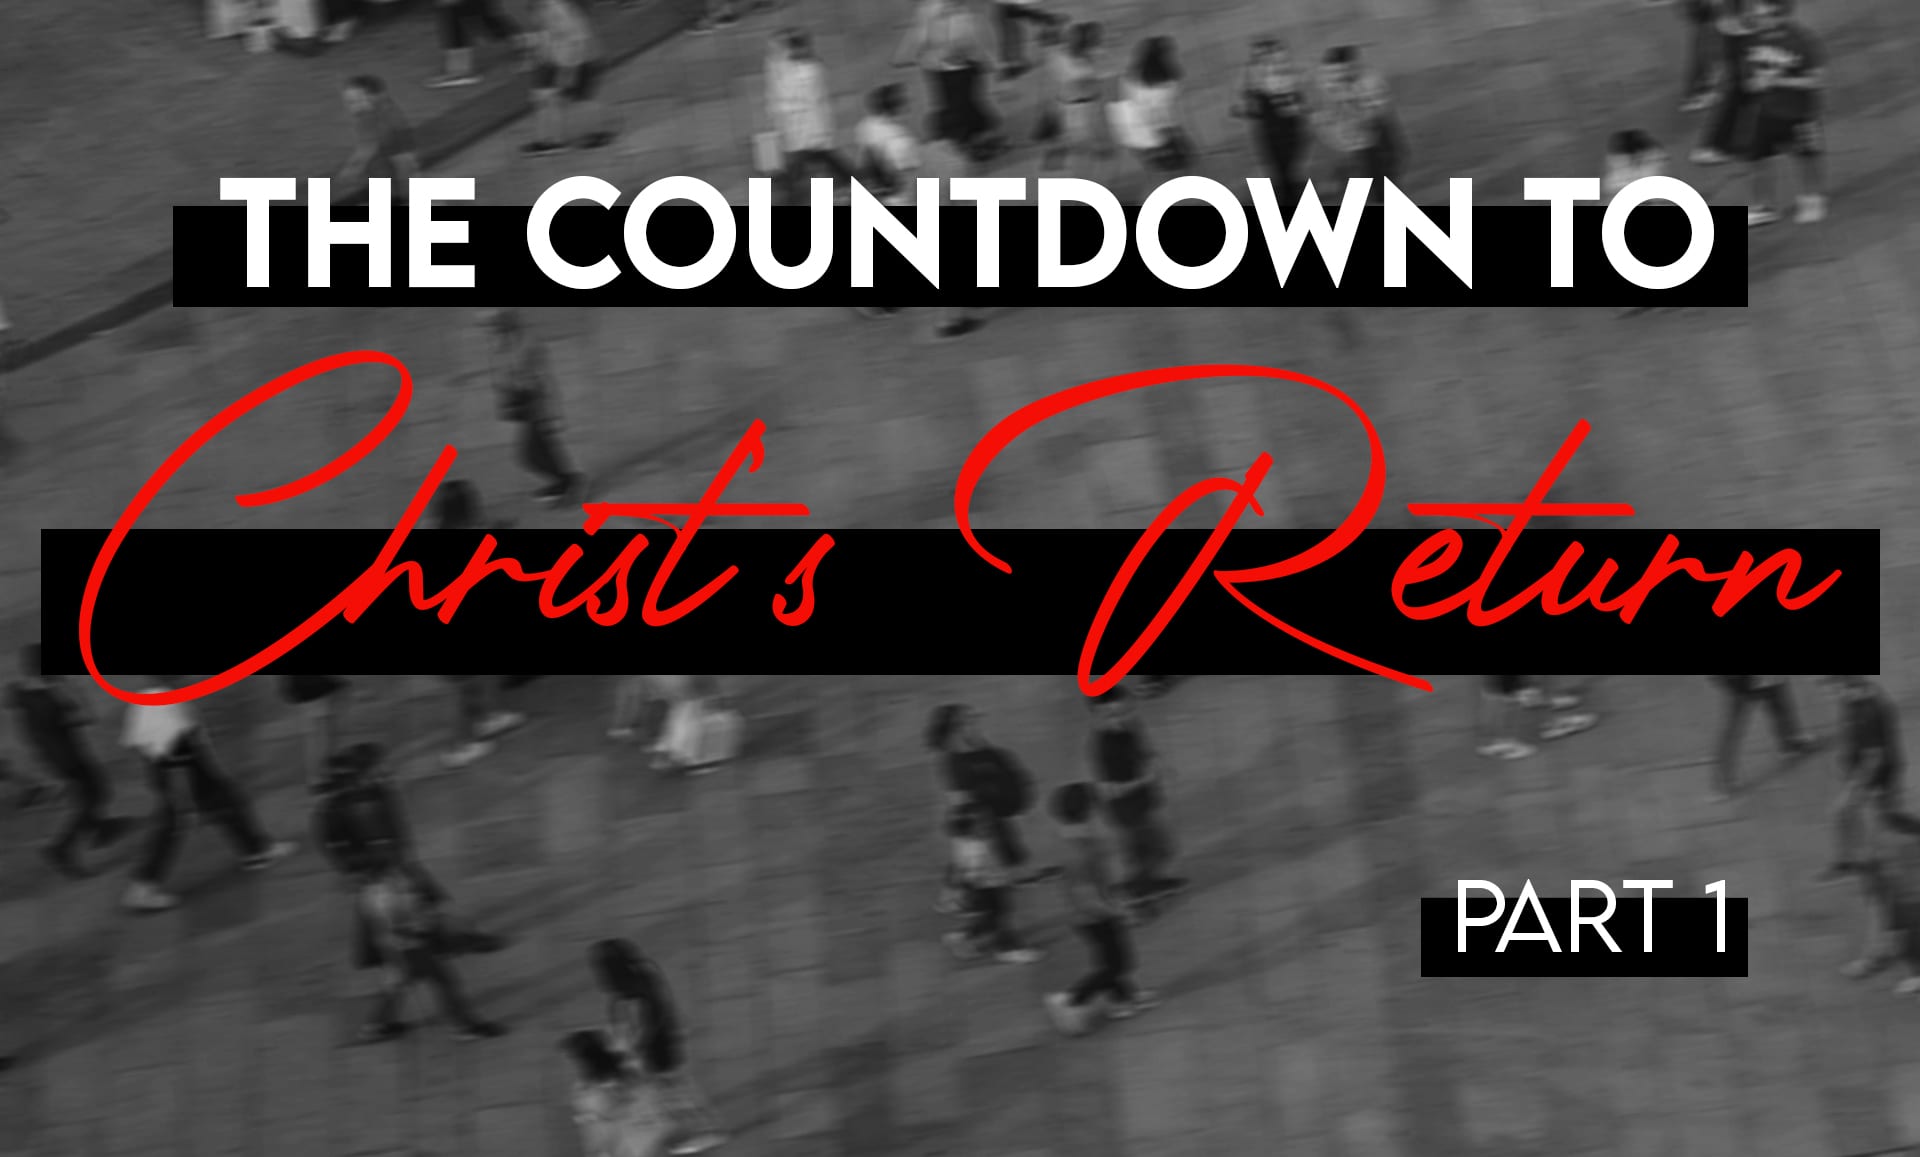 Countdown to Christ Return